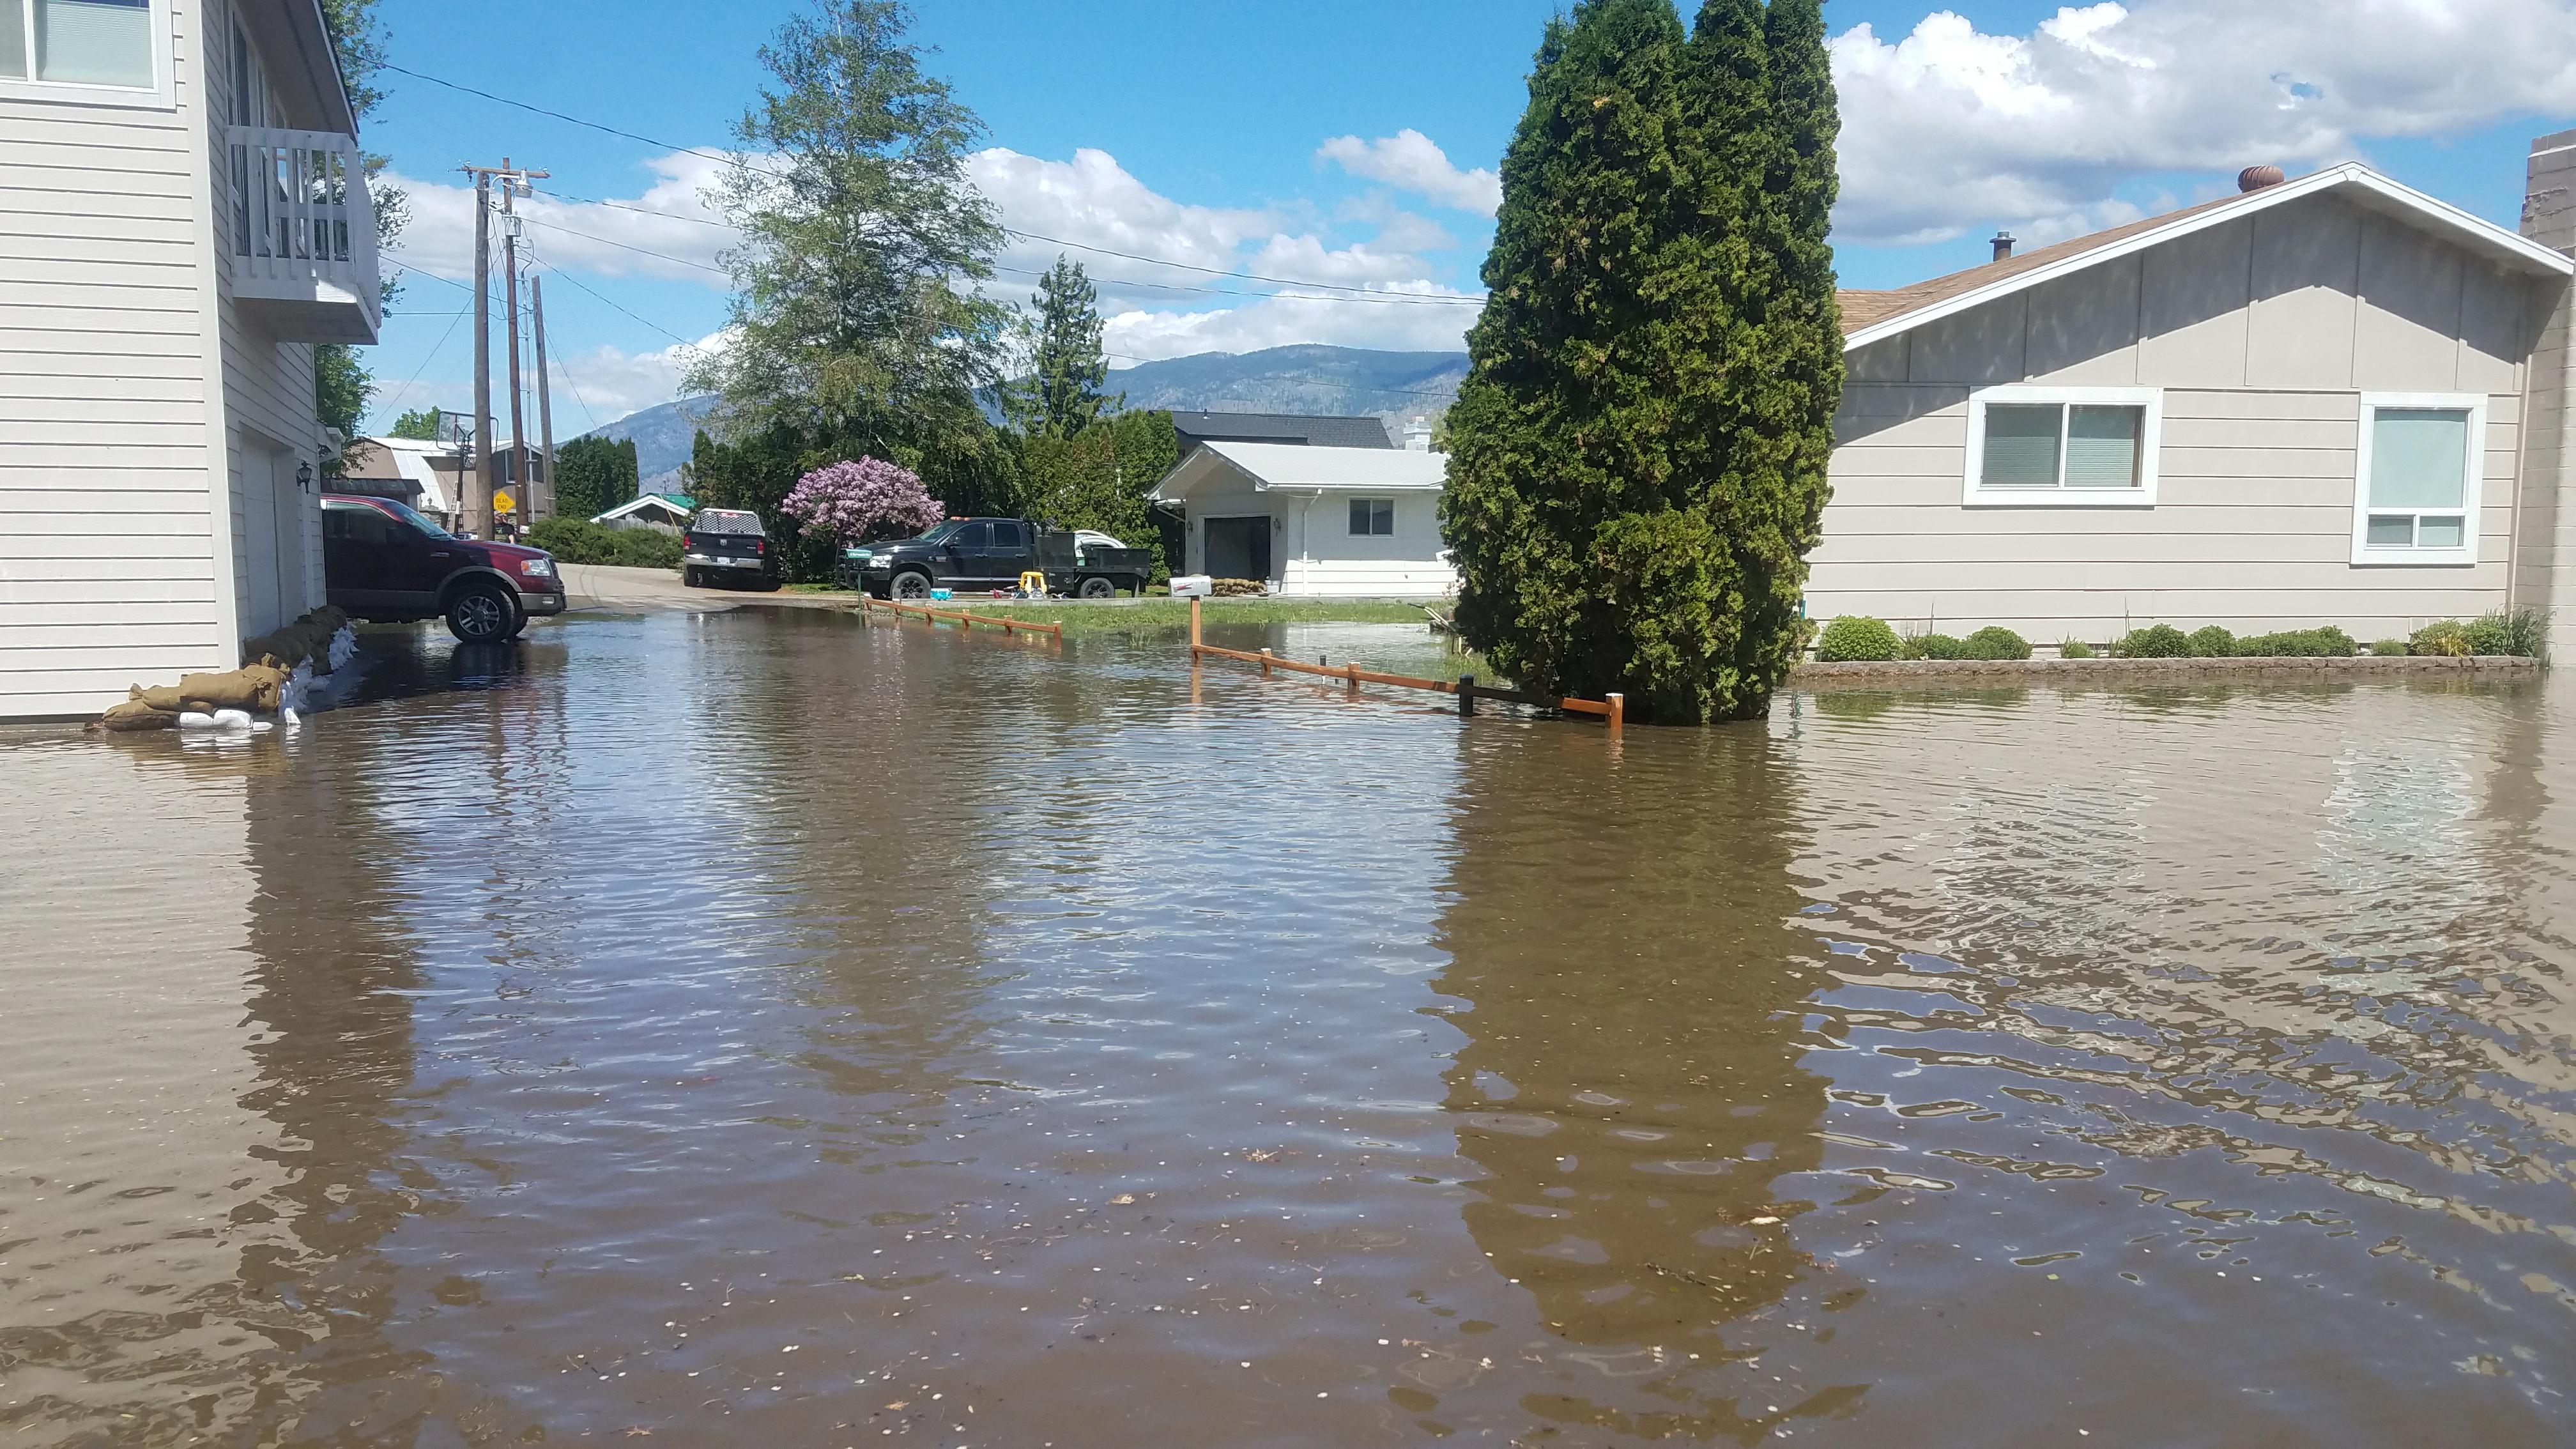 Flooding in Eastern Washington reaches emergency levels KATU